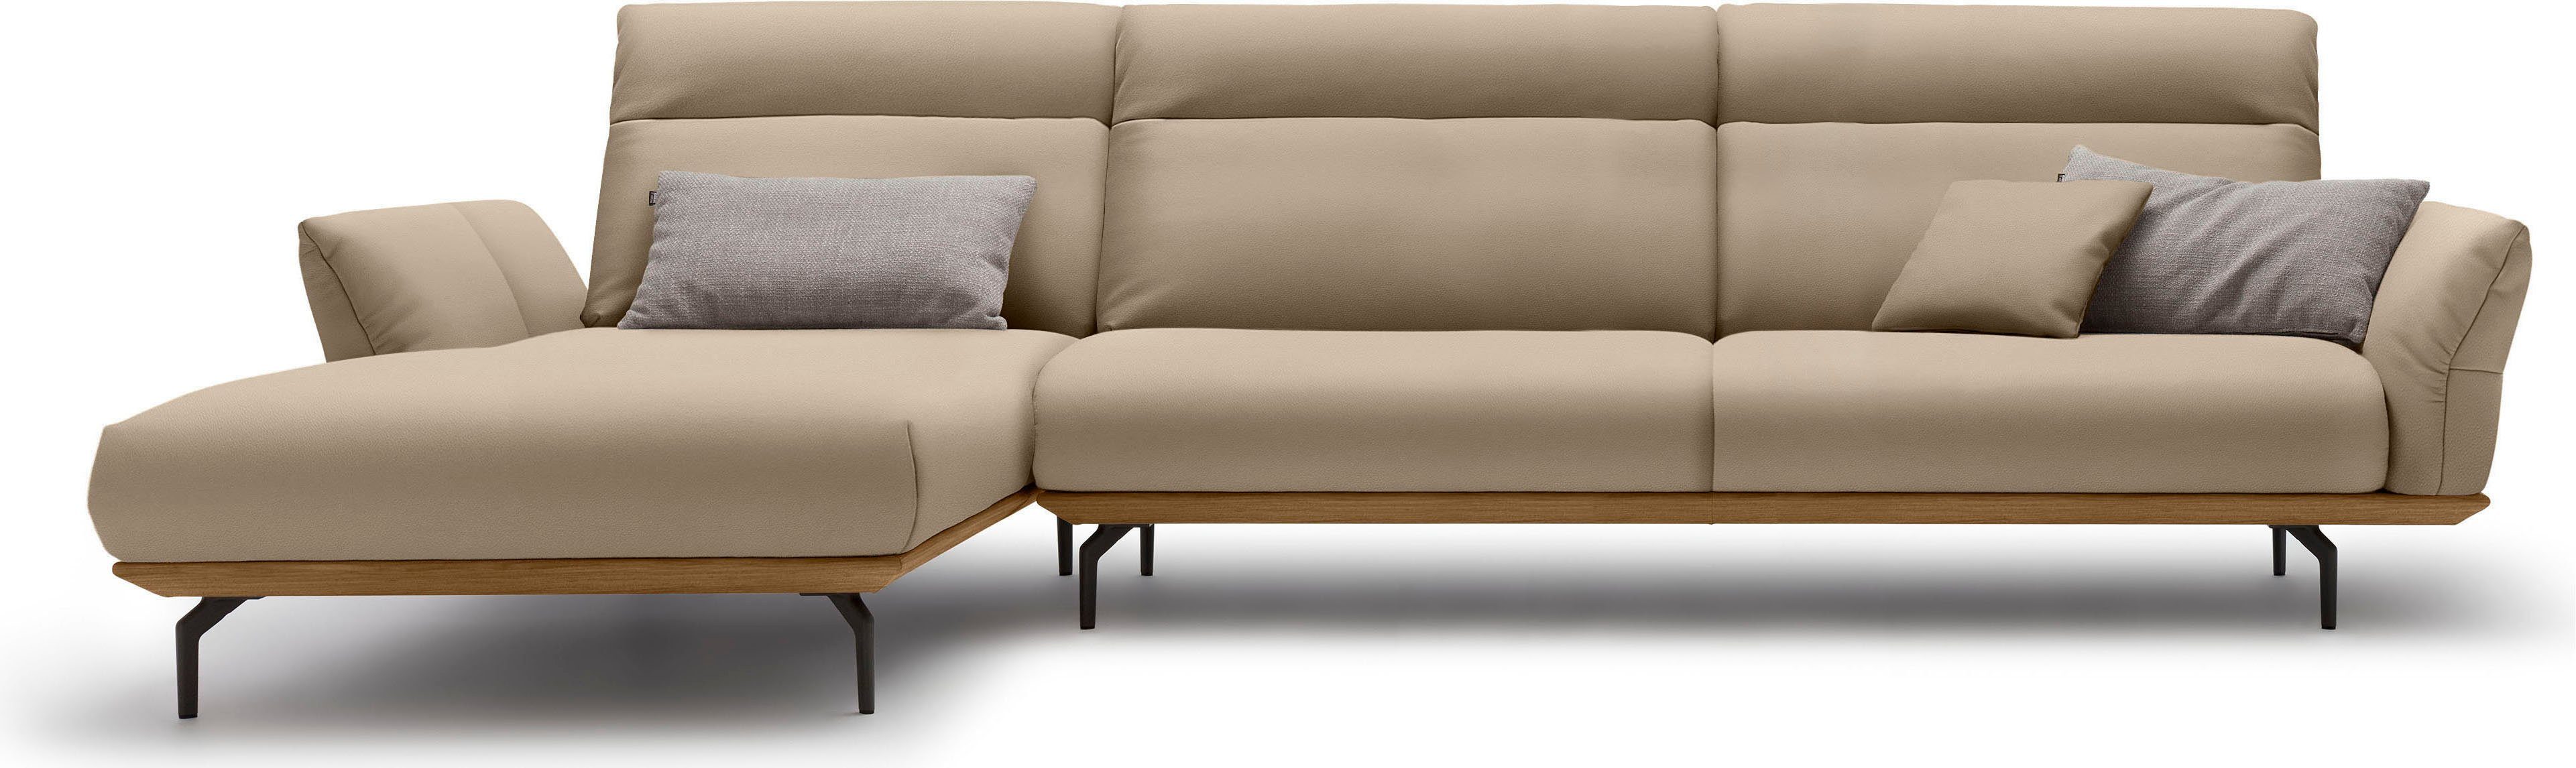 hülsta sofa Ecksofa hs.460, Sockel in Nussbaum, Winkelfüße in Umbragrau, Breite 338 cm | Ecksofas